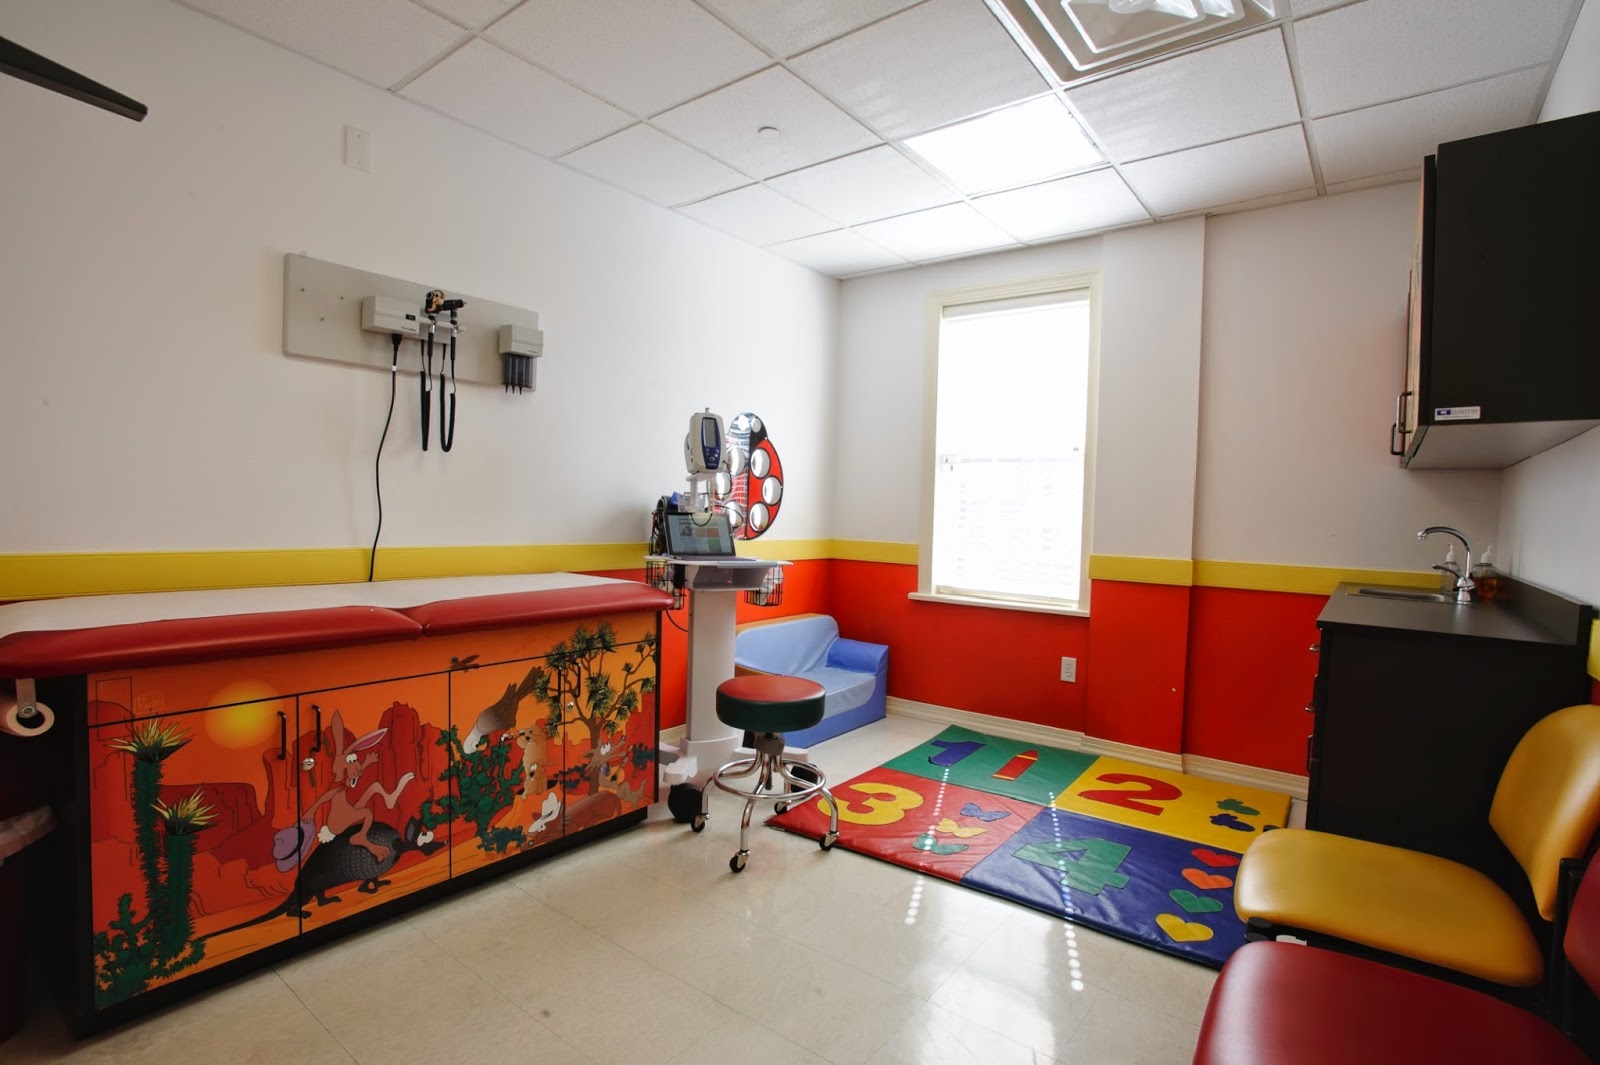 Photo of Passaic Pediatrics in Passaic City, New Jersey, United States - 2 Picture of Point of interest, Establishment, Health, Doctor